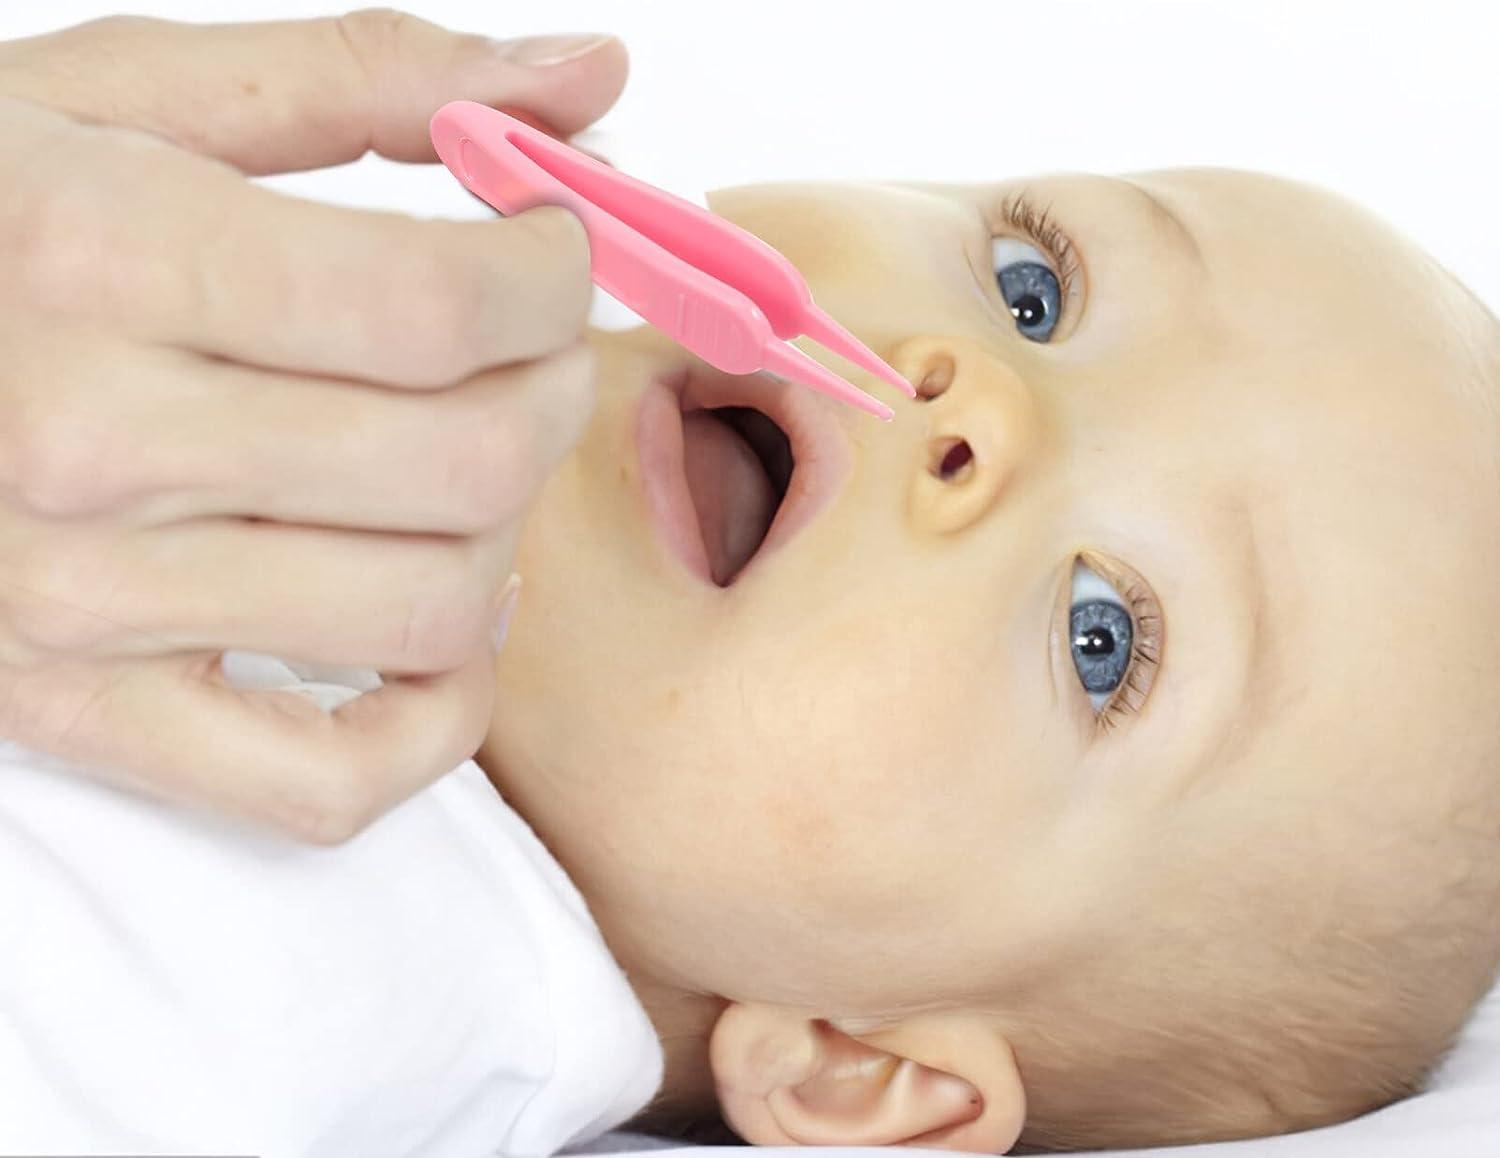 Baby Nose Cleaning Clip Tweezers Ear Naval Cleaner Infant Kid Safety  Tweezer